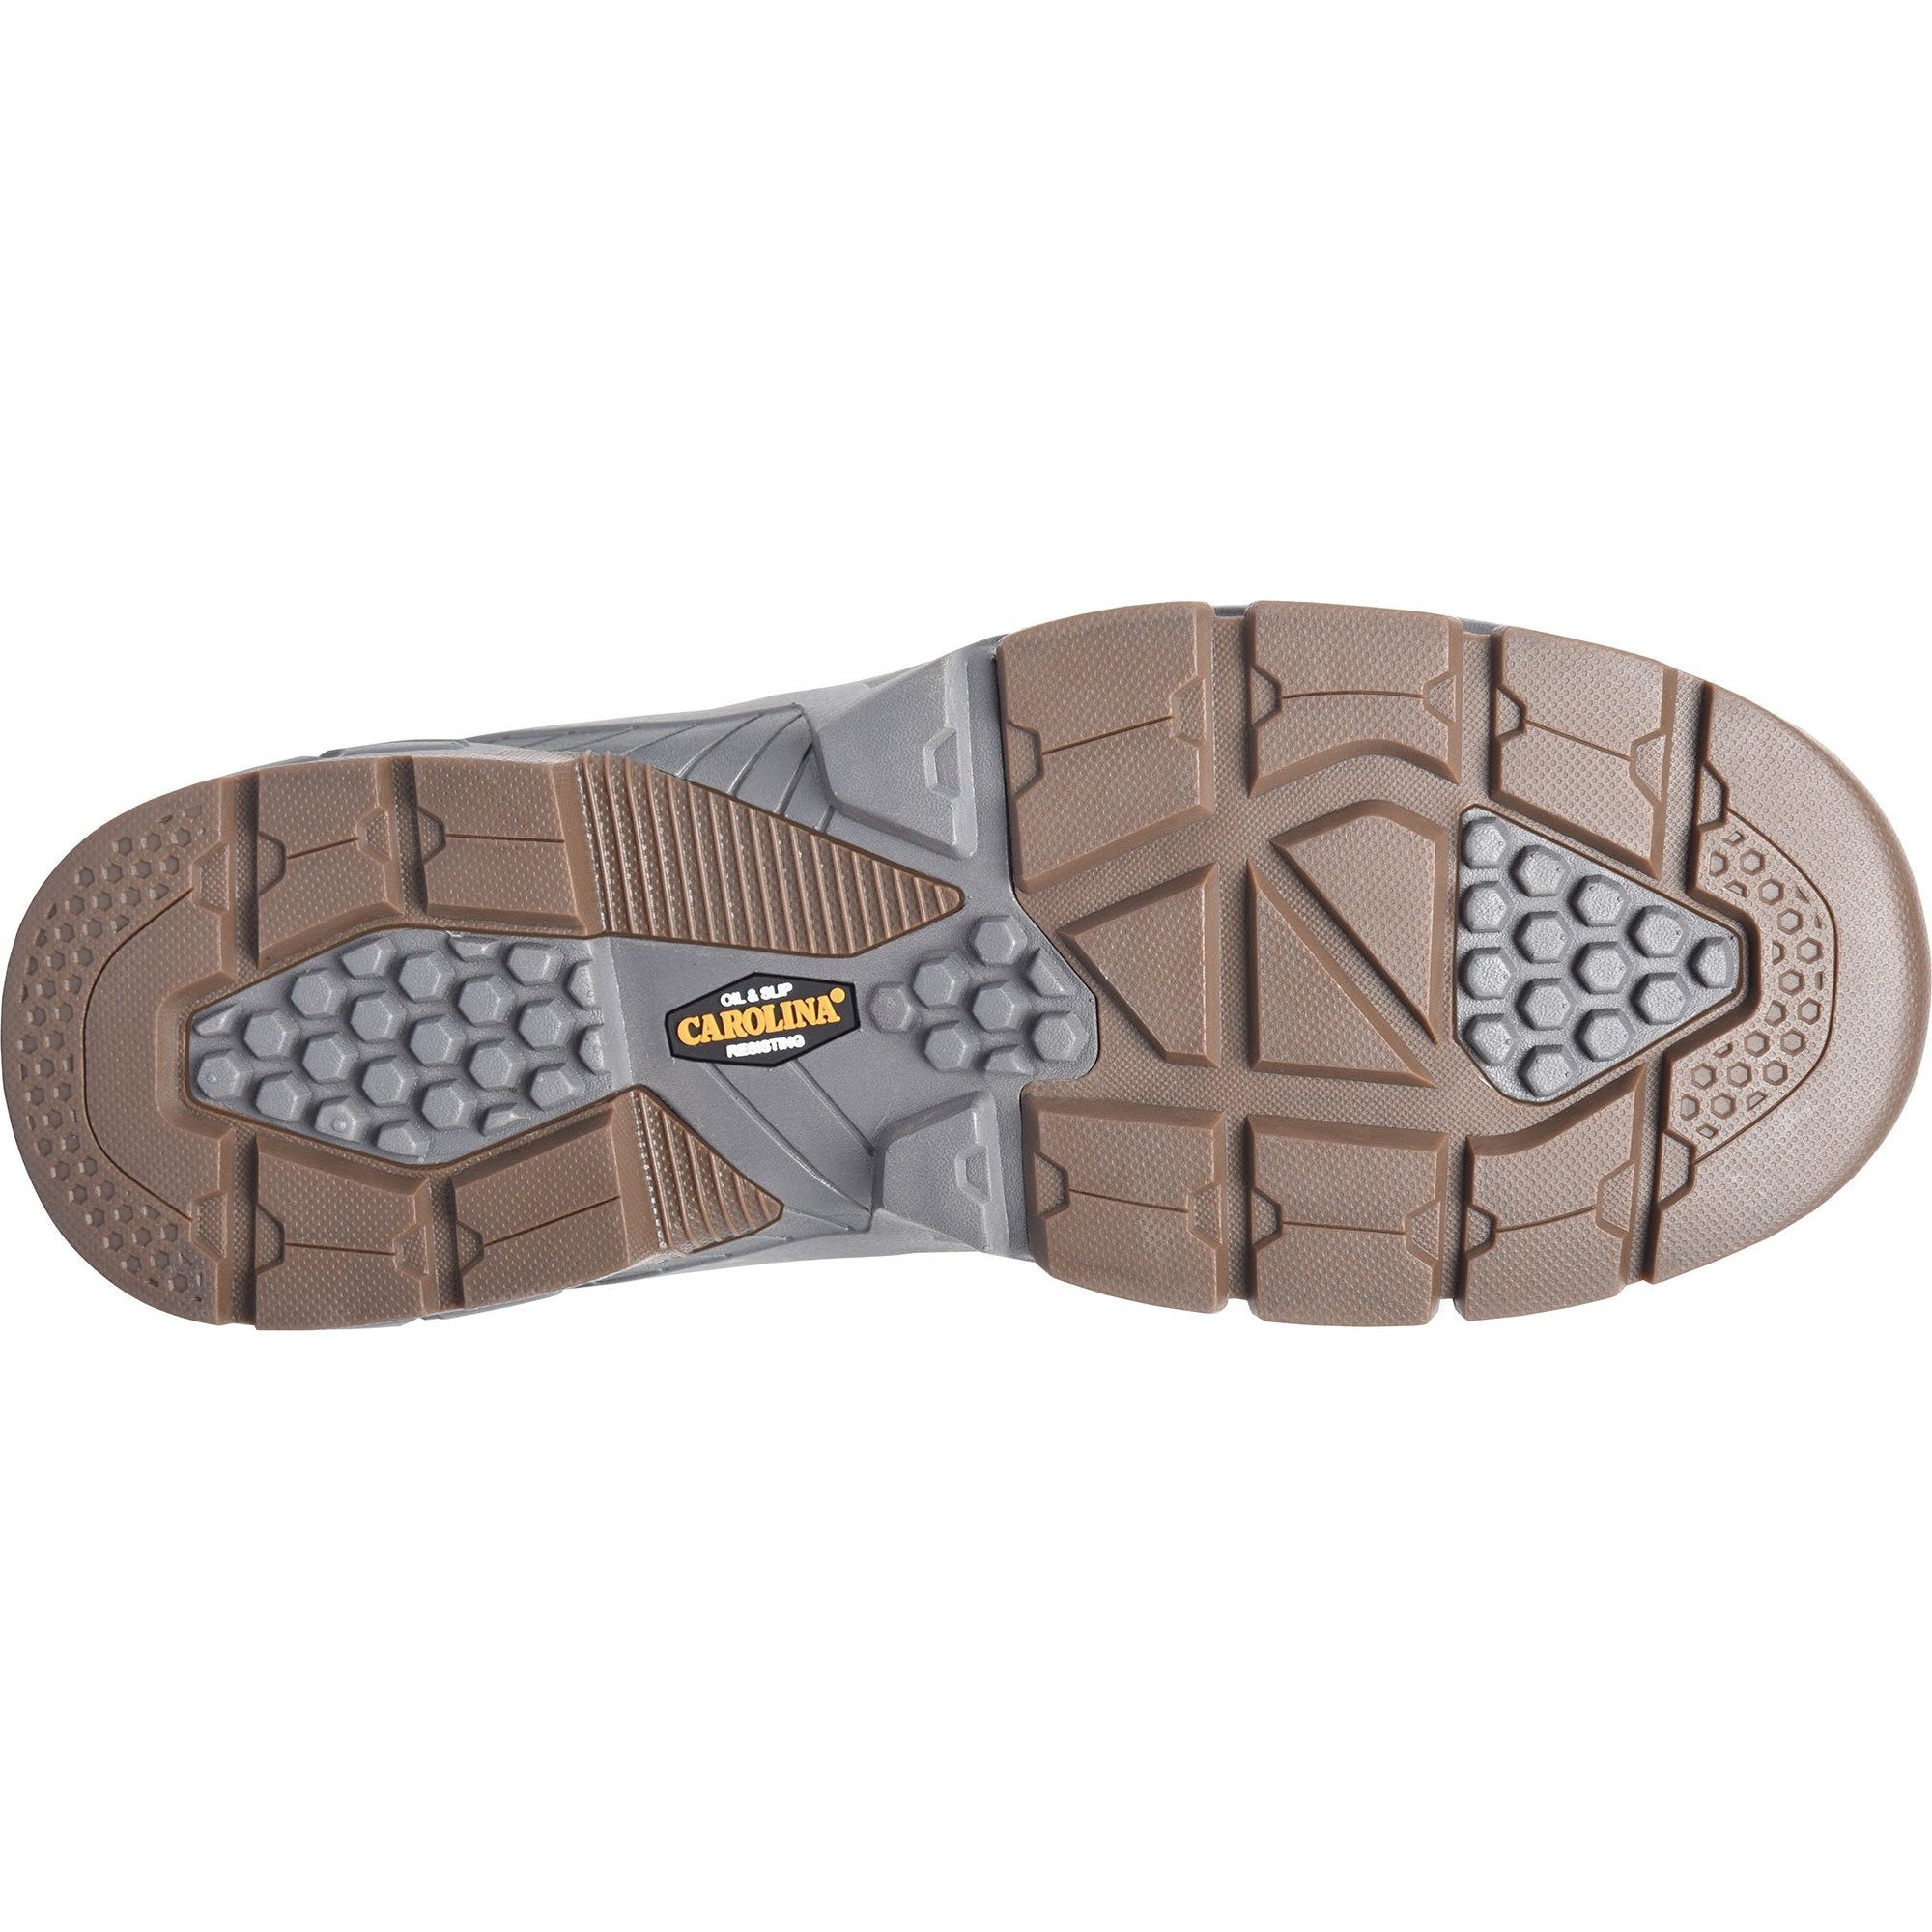 Carolina Men’s Duke Carbon 8" WP Comp Toe  Work Boot -Brown- CA5543  - Overlook Boots